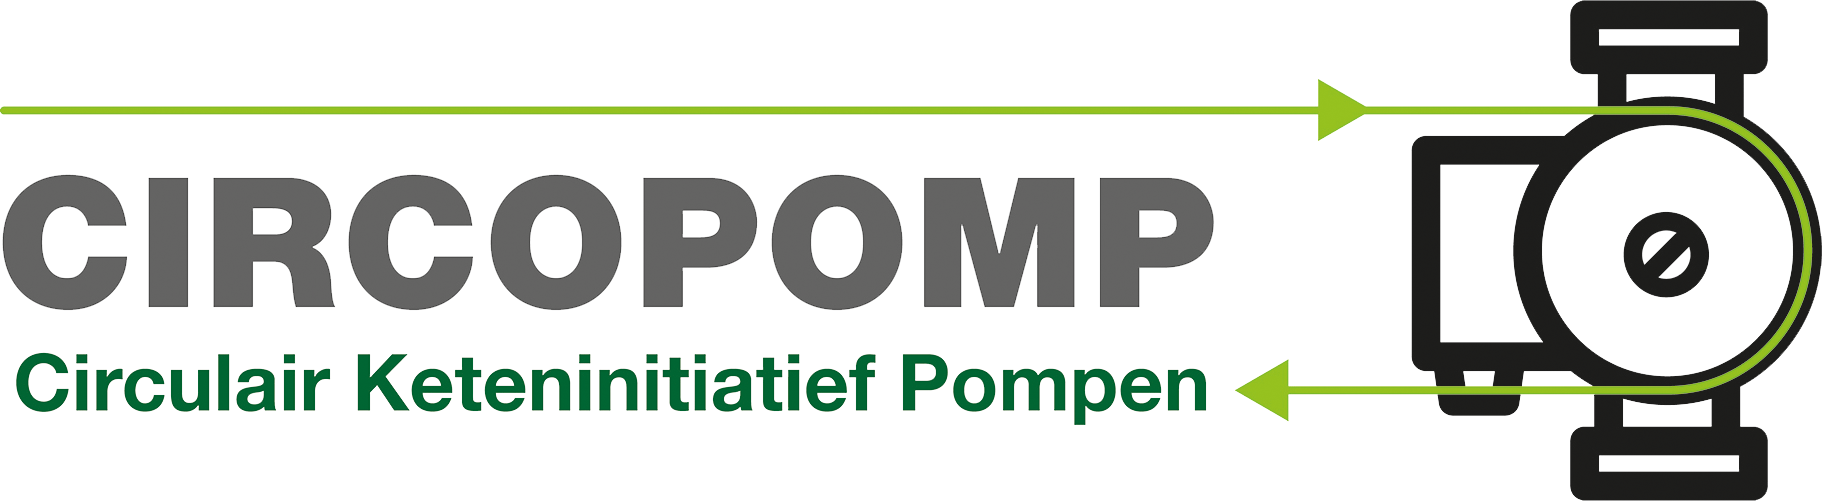 Circopomp-logo.png